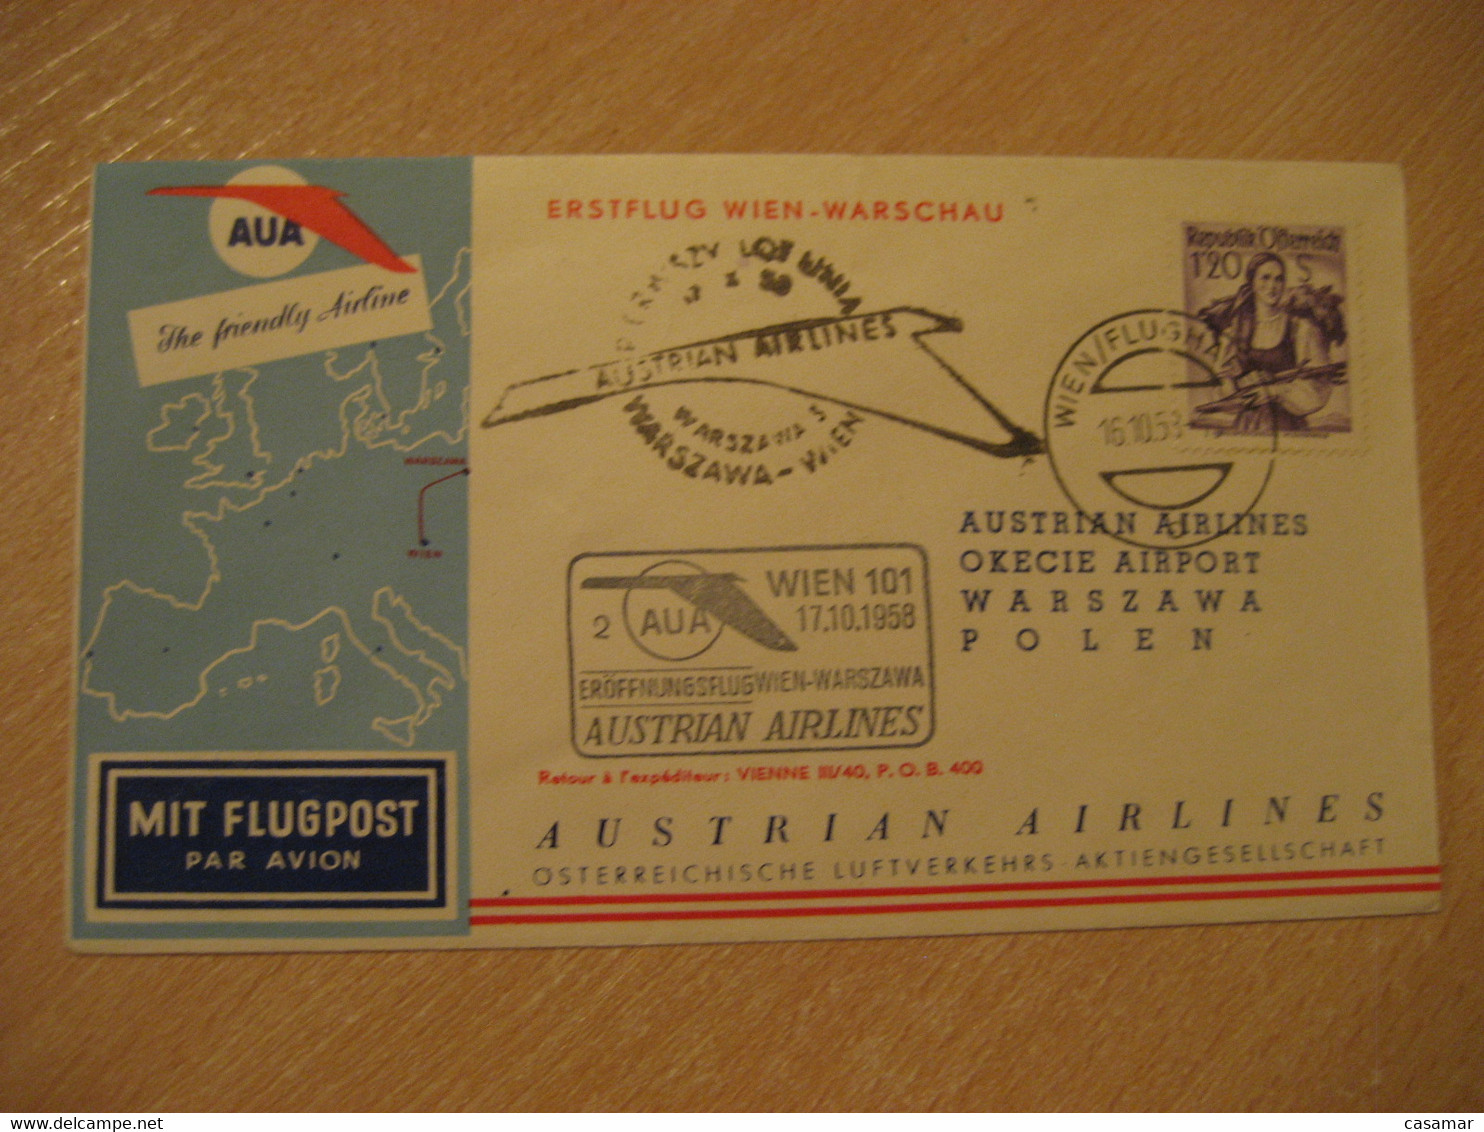 WARSZAWA Warsaw Wien 1958 AUA Austrian Airlines Airline First Flight Cancel Cover POLAND AUSTRIA - Airplanes